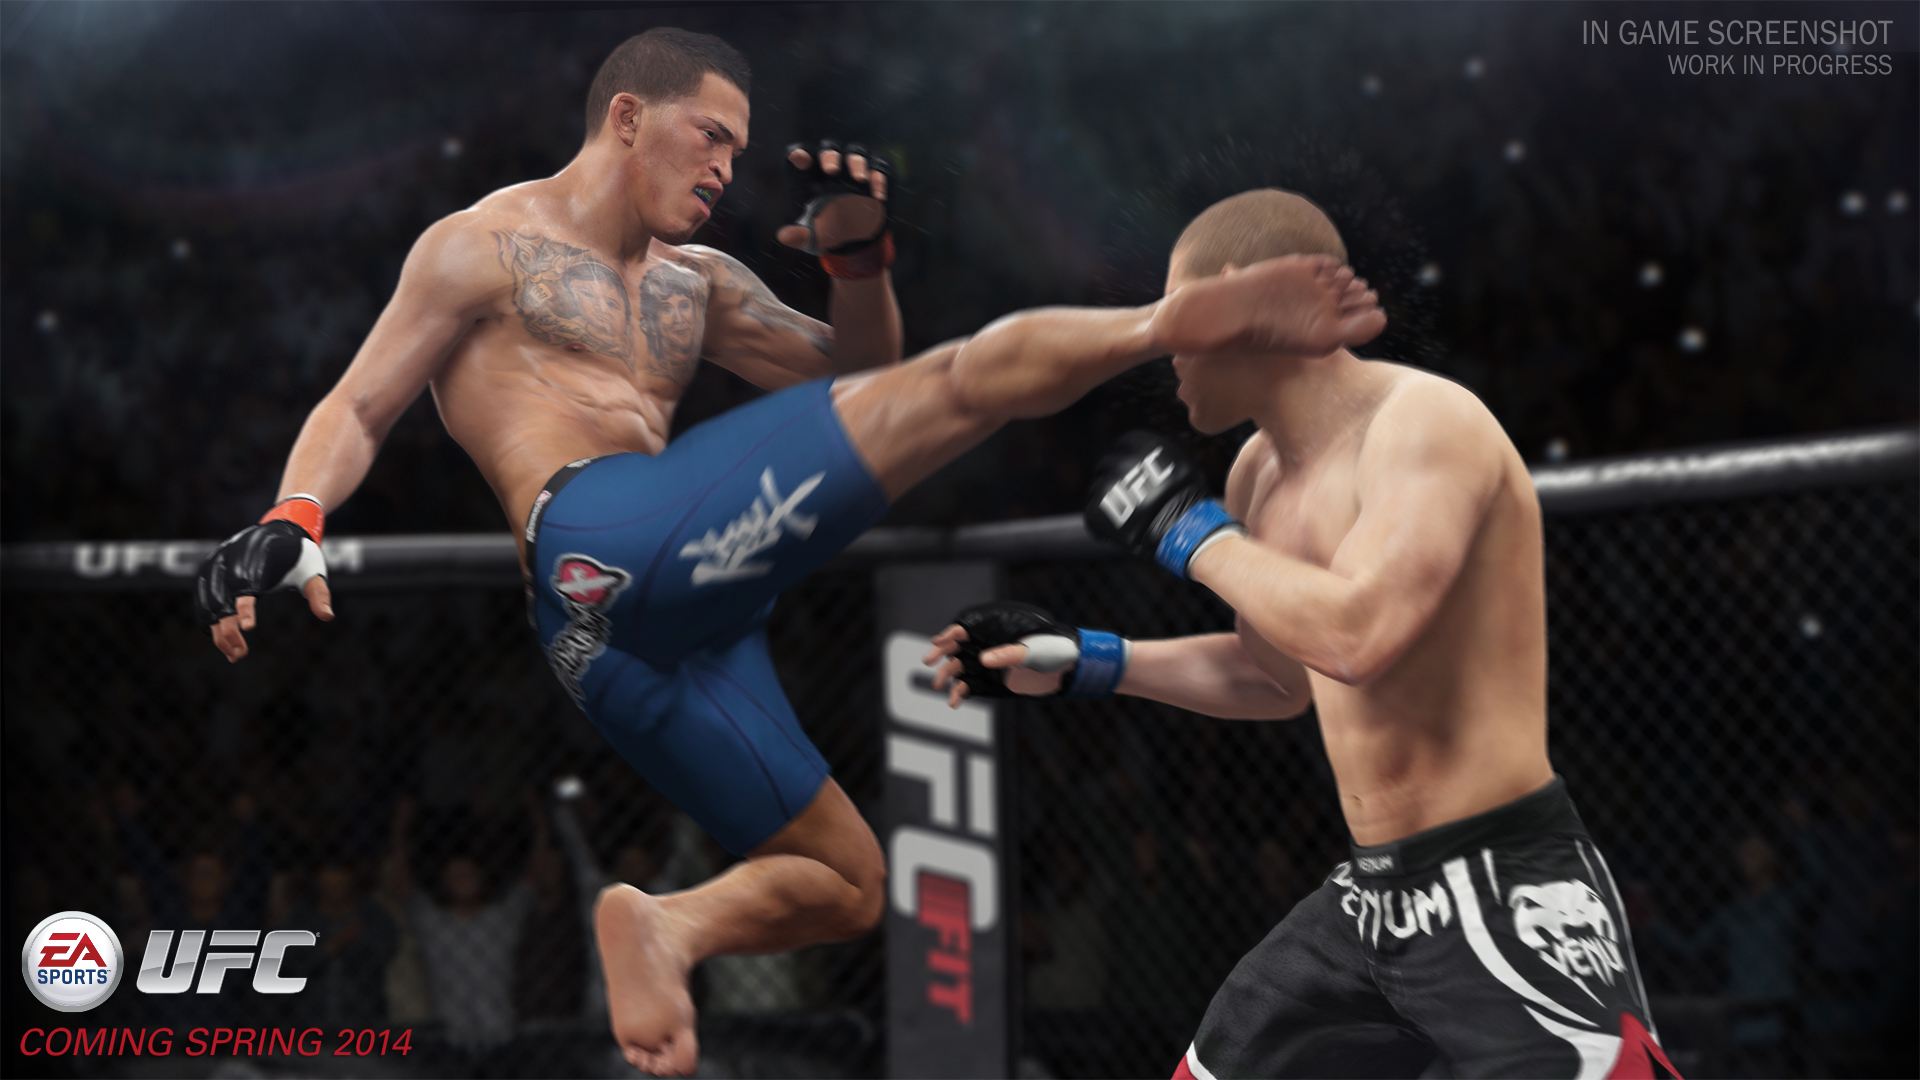 EA Sports UFC HD wallpapers, Desktop wallpaper - most viewed